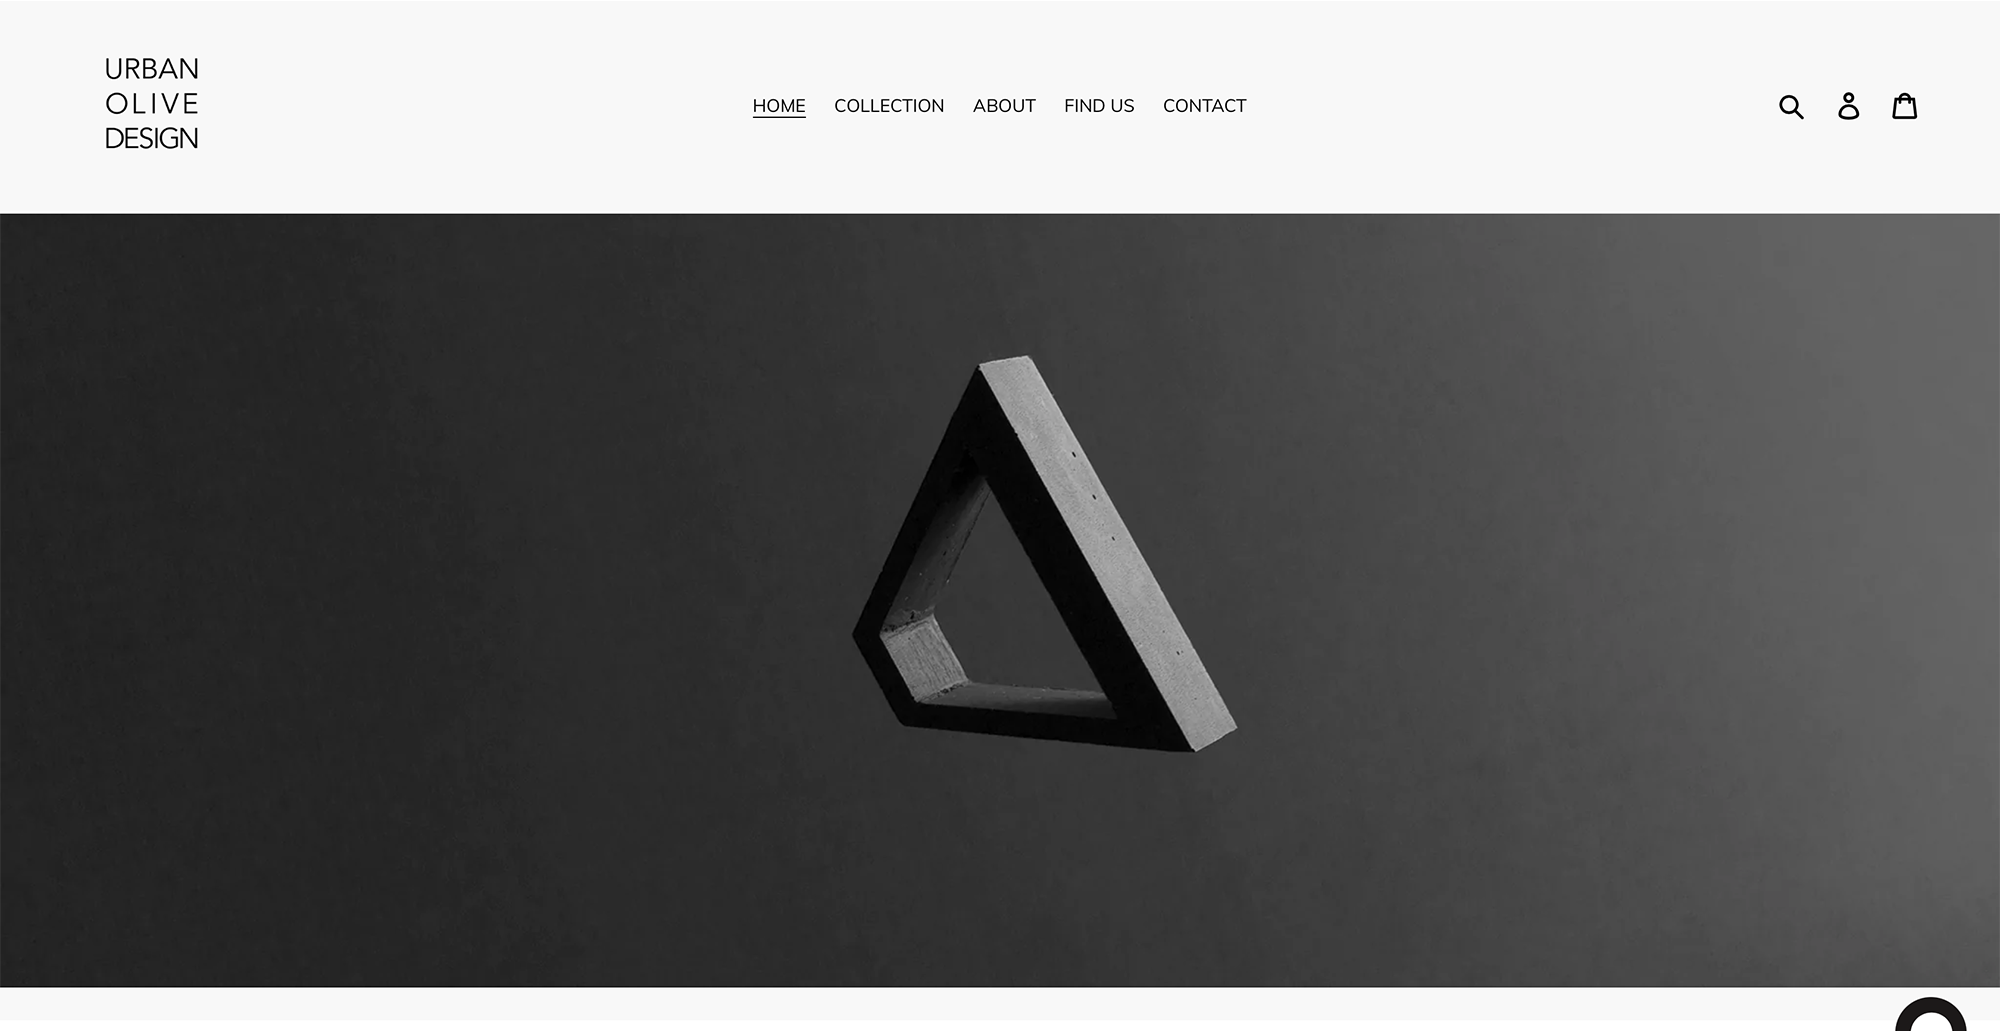 URBAN OLIVE DESIGN website screenshot